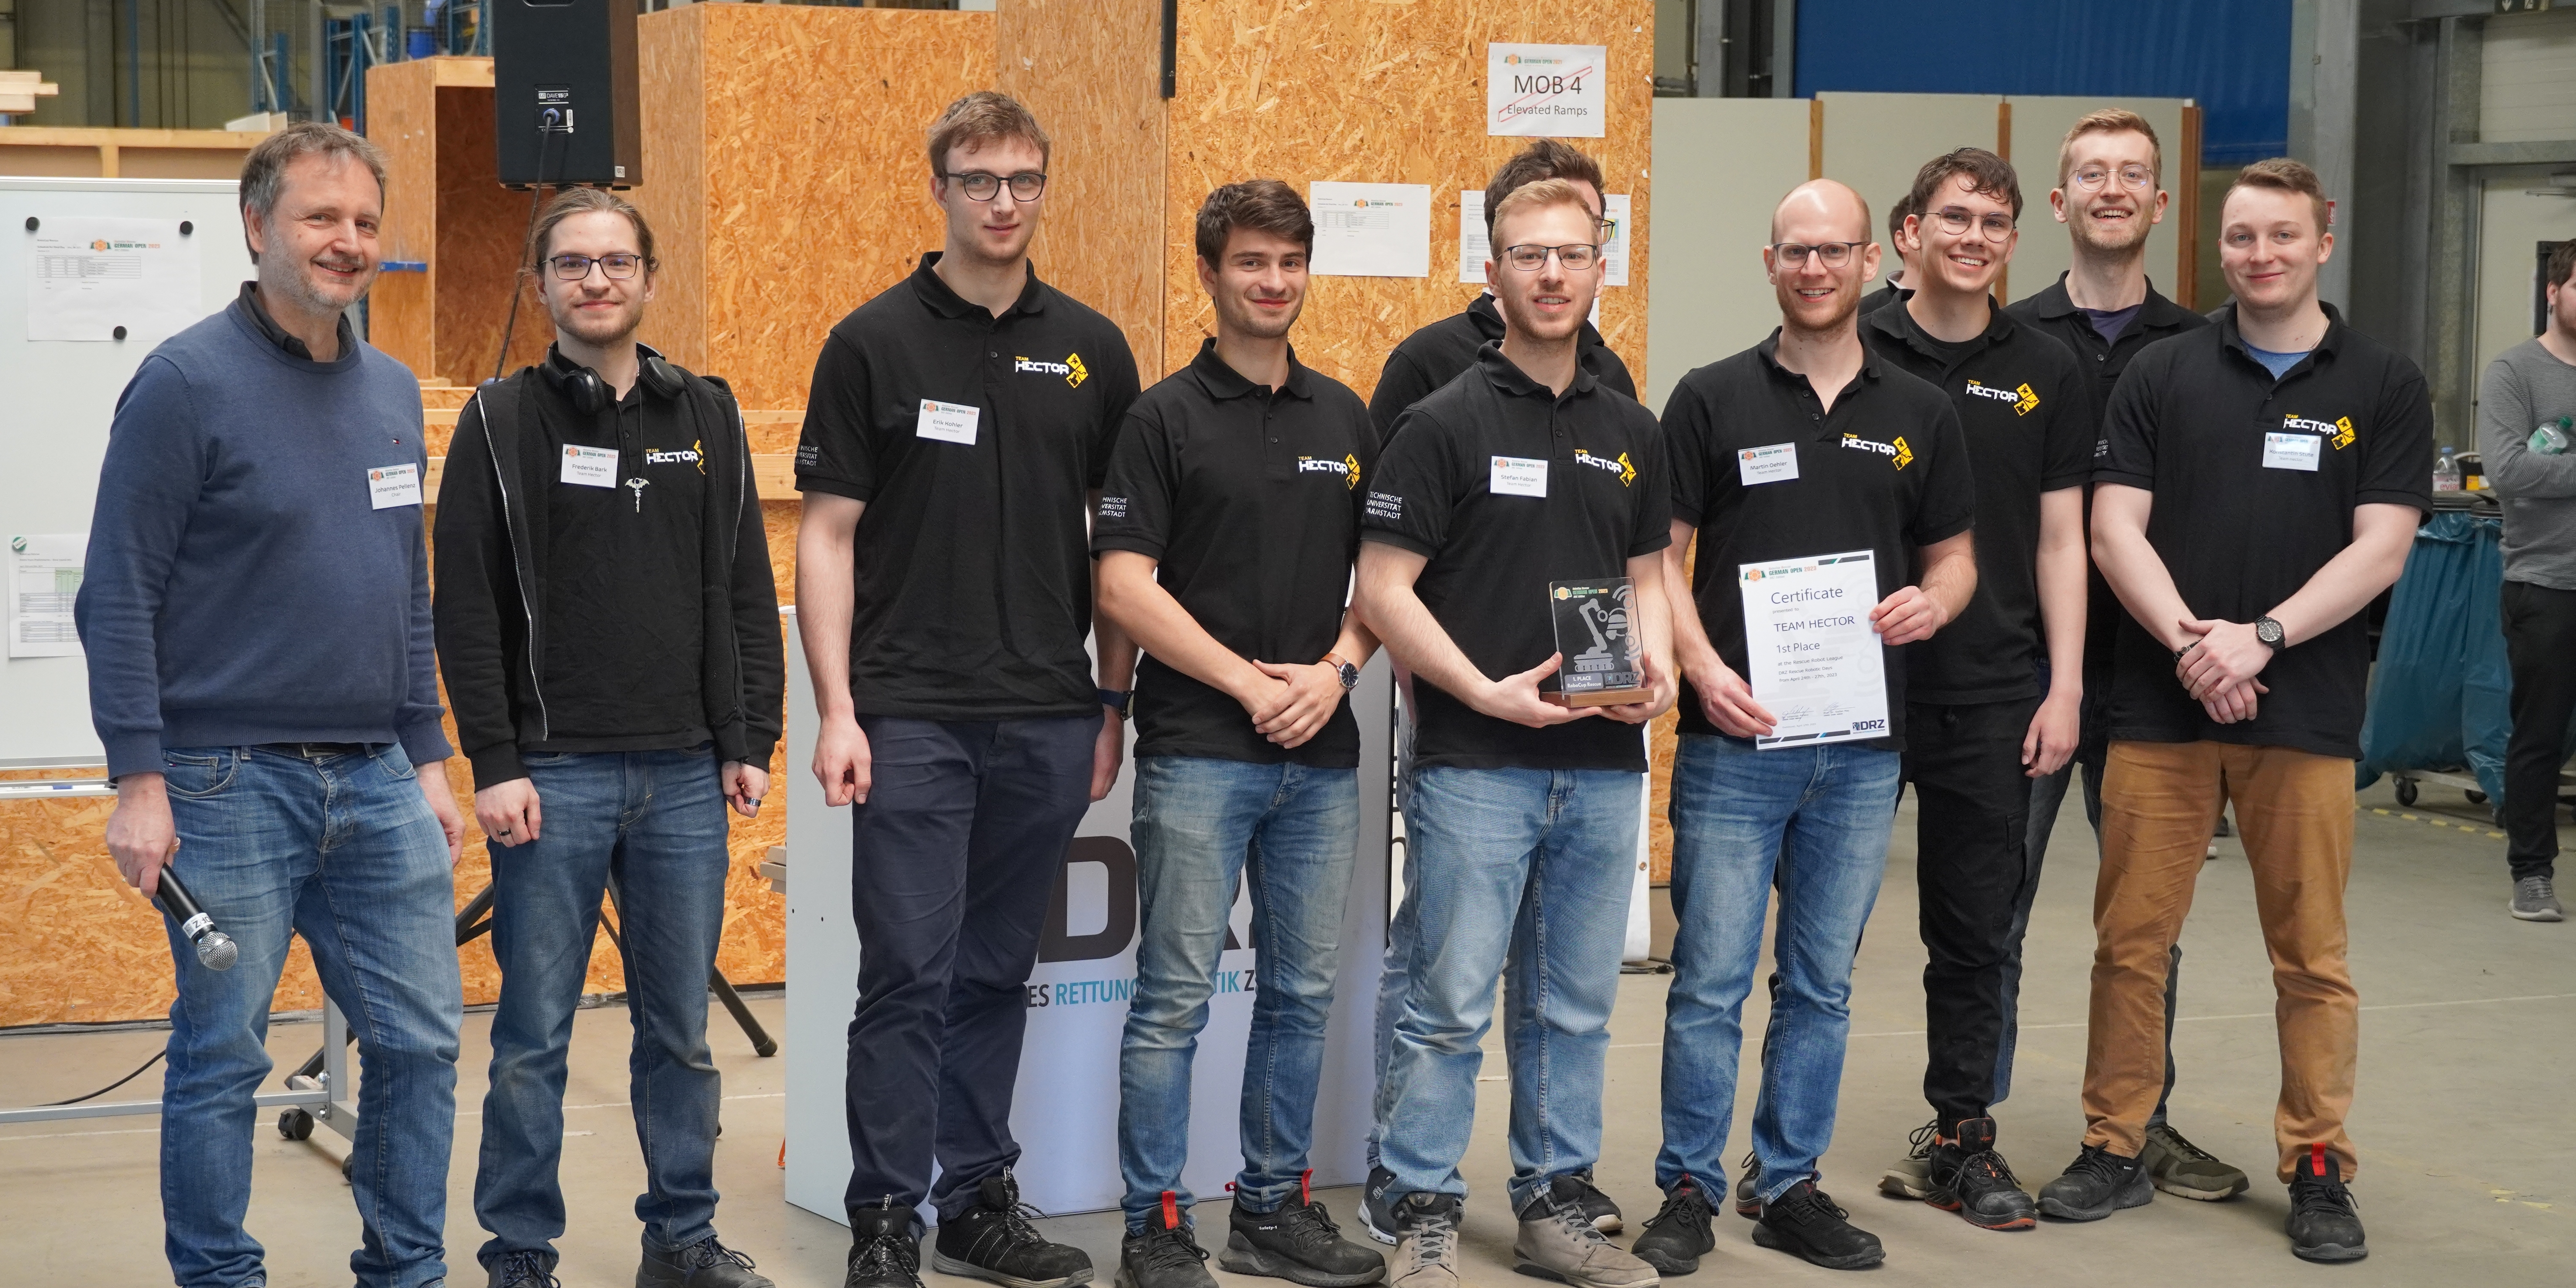 Team Hector Wins Rescue Robotics Competition at the German Rescue Robotics Center